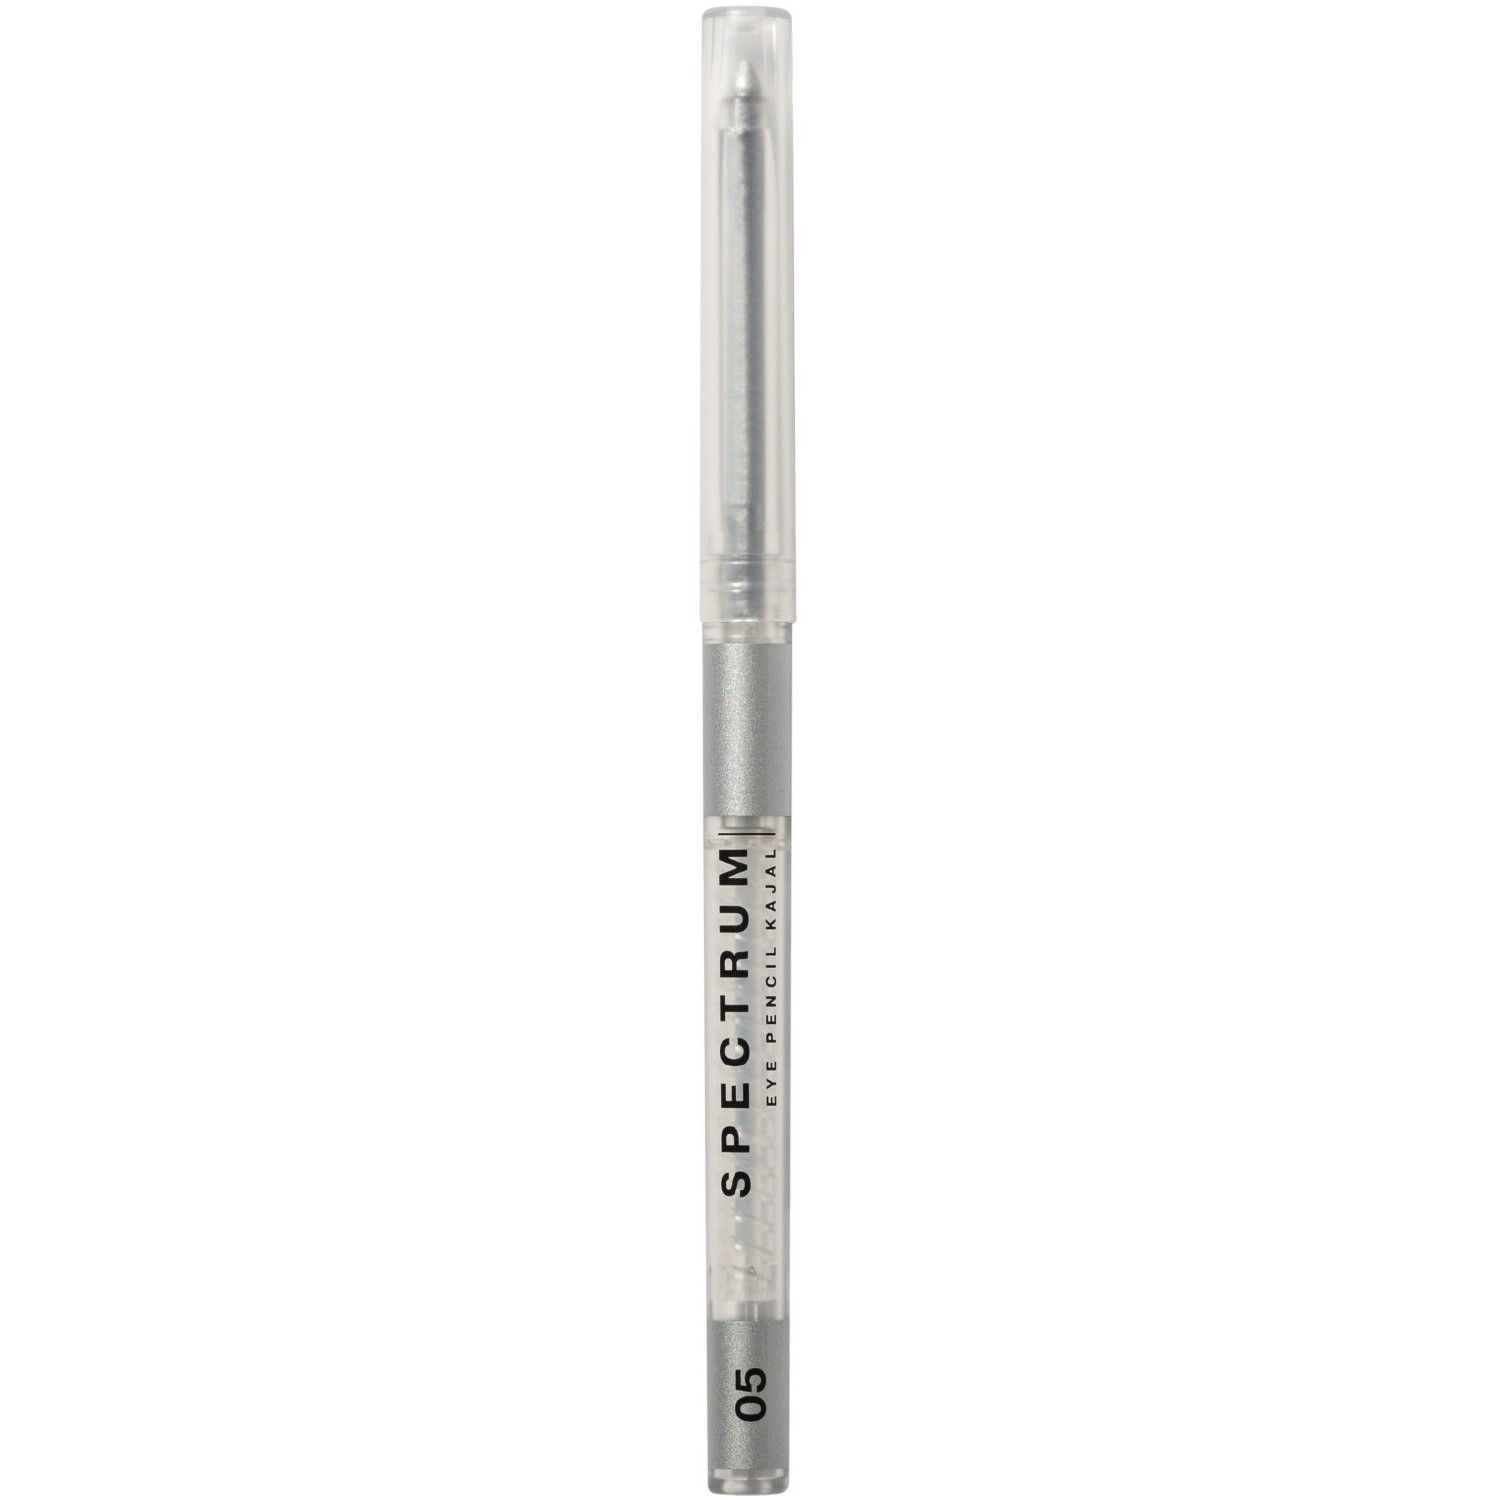 Карандаш для глаз Influence Beauty Spectrum автоматический, гелевый тон 05 0,28 г influence beauty автоматический гелевый карандаш для глаз ekso natural стойкий